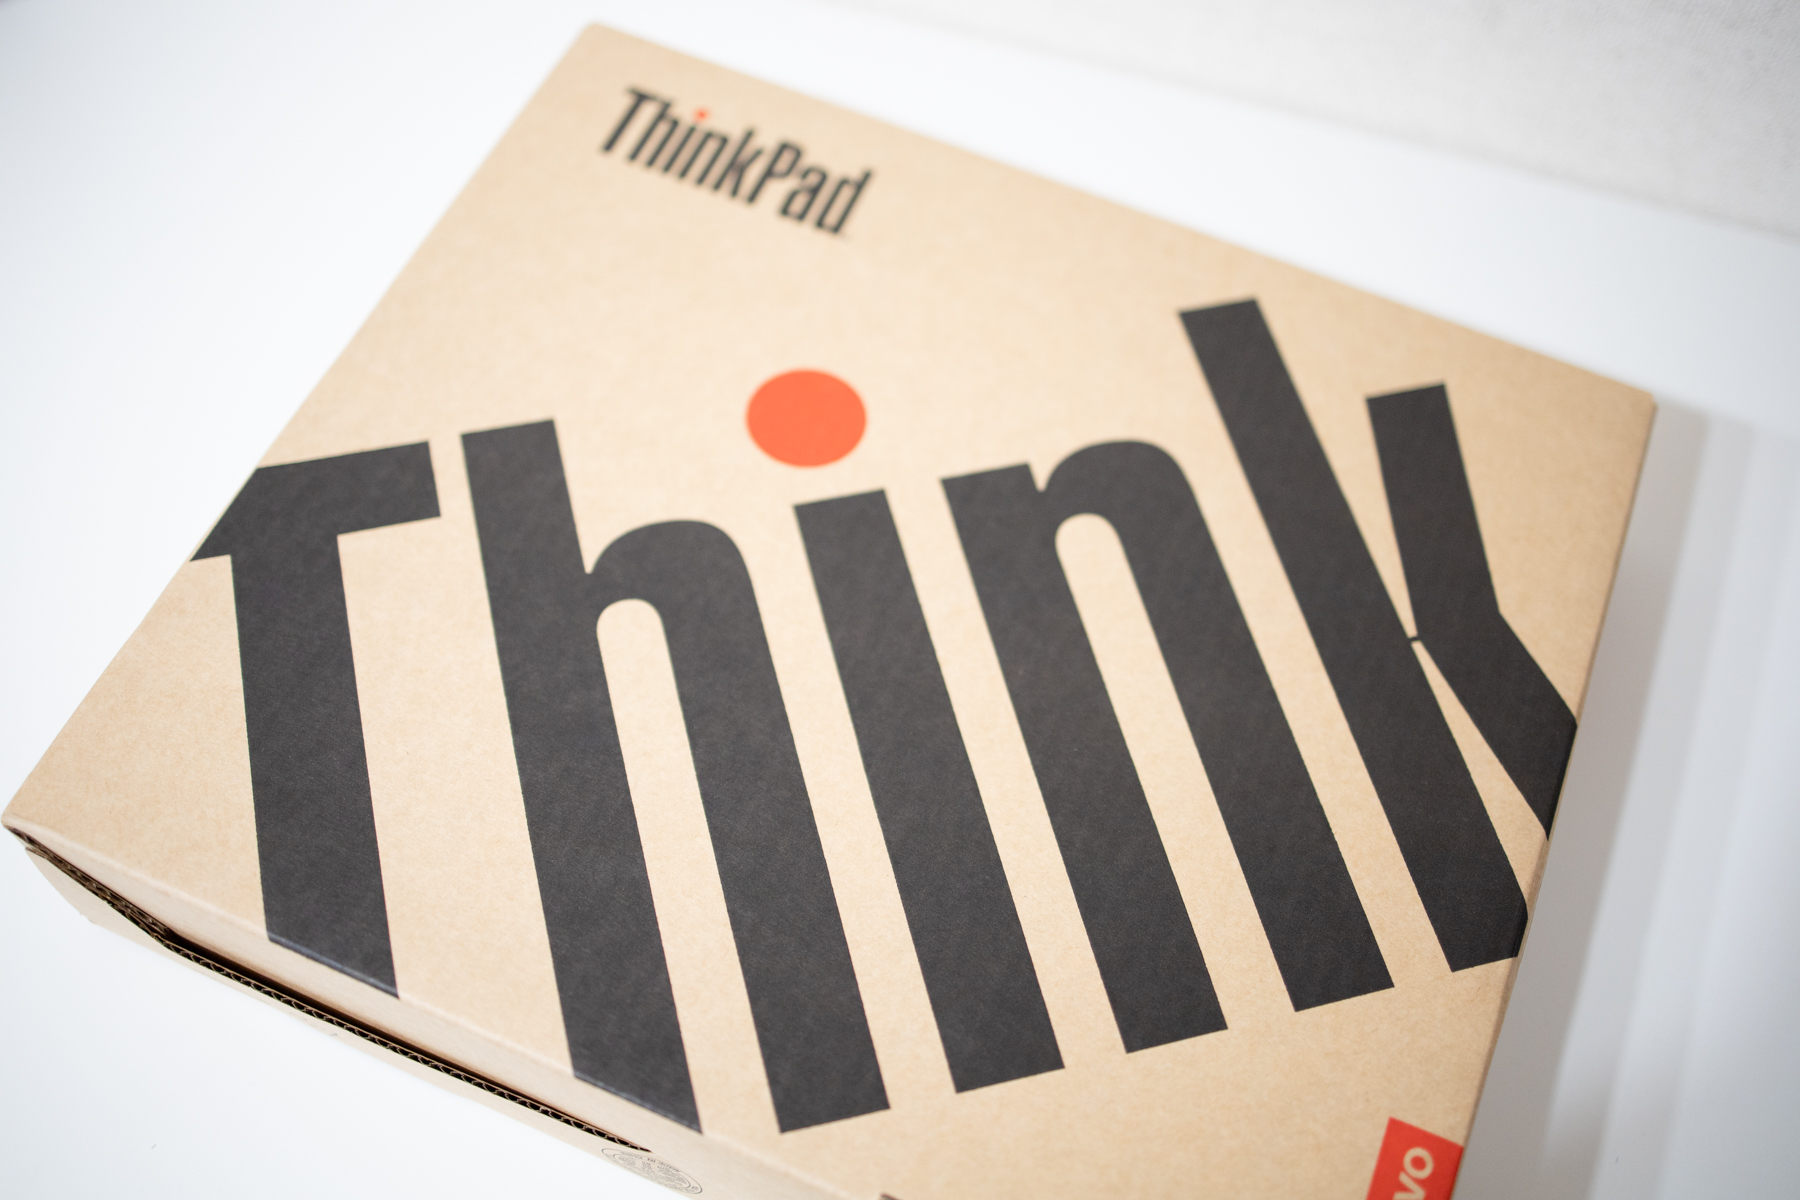 ThinkPad X13